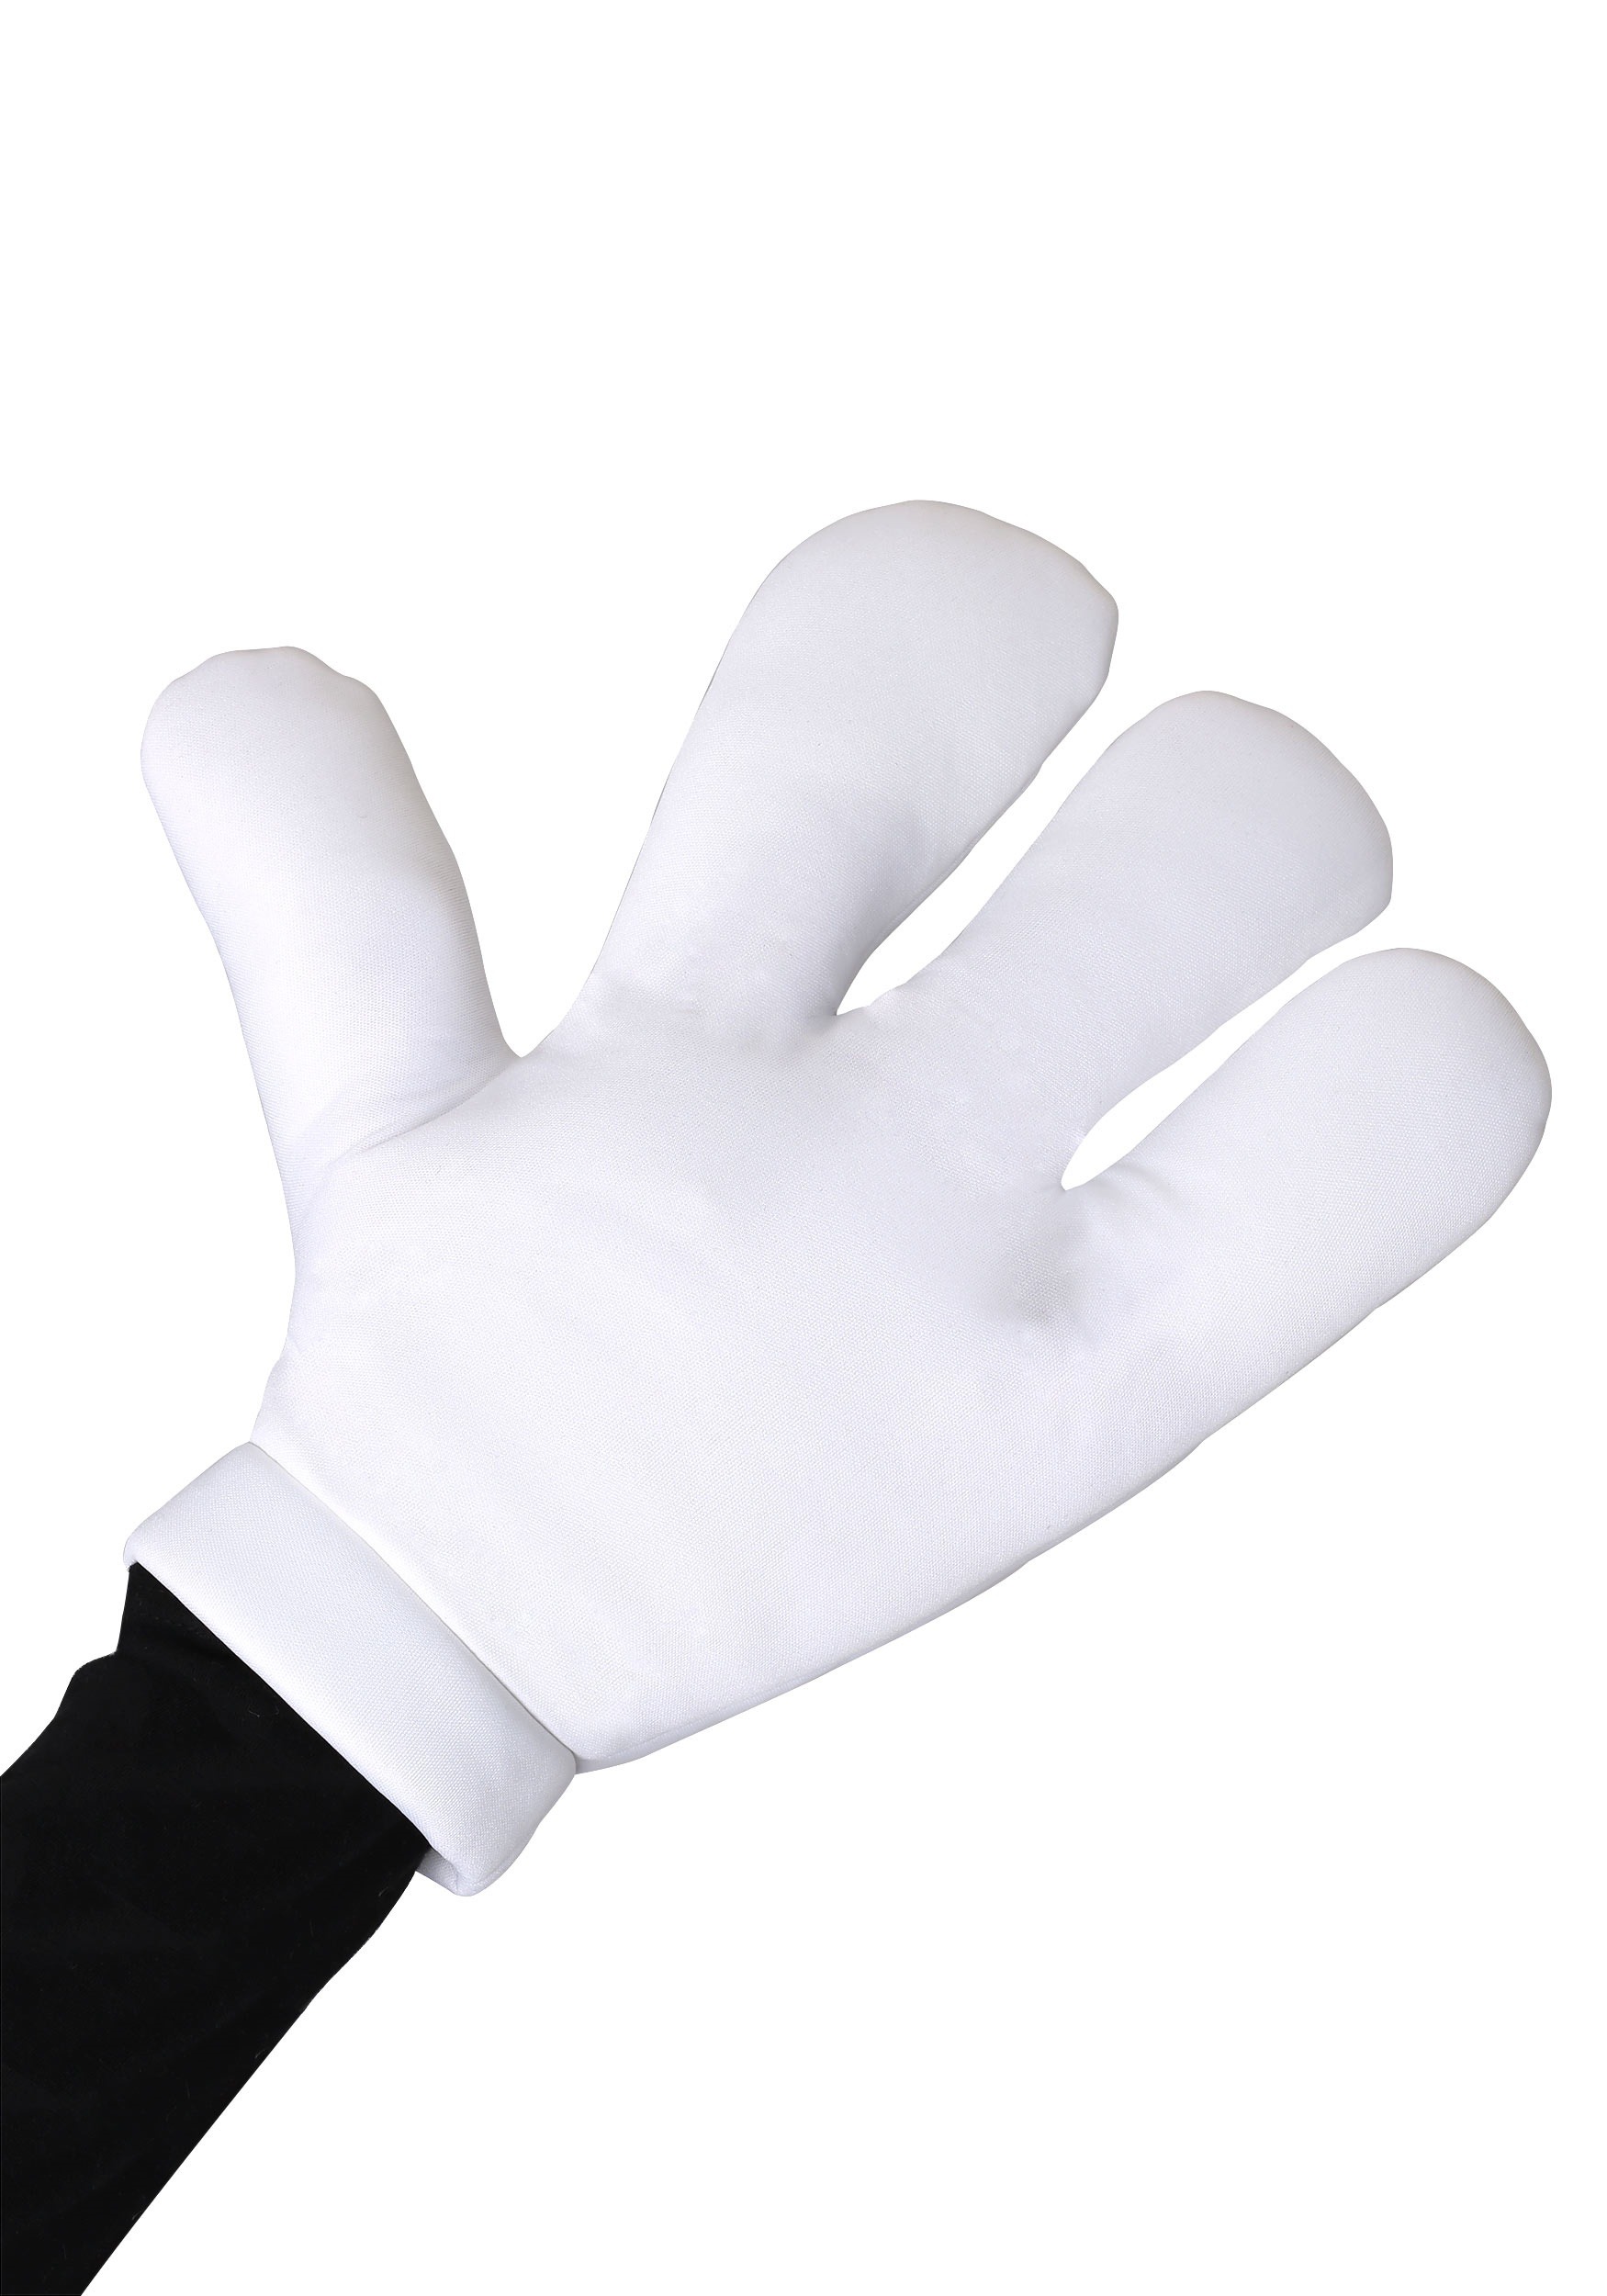 Adult Giant Cartoon Hand Gloves